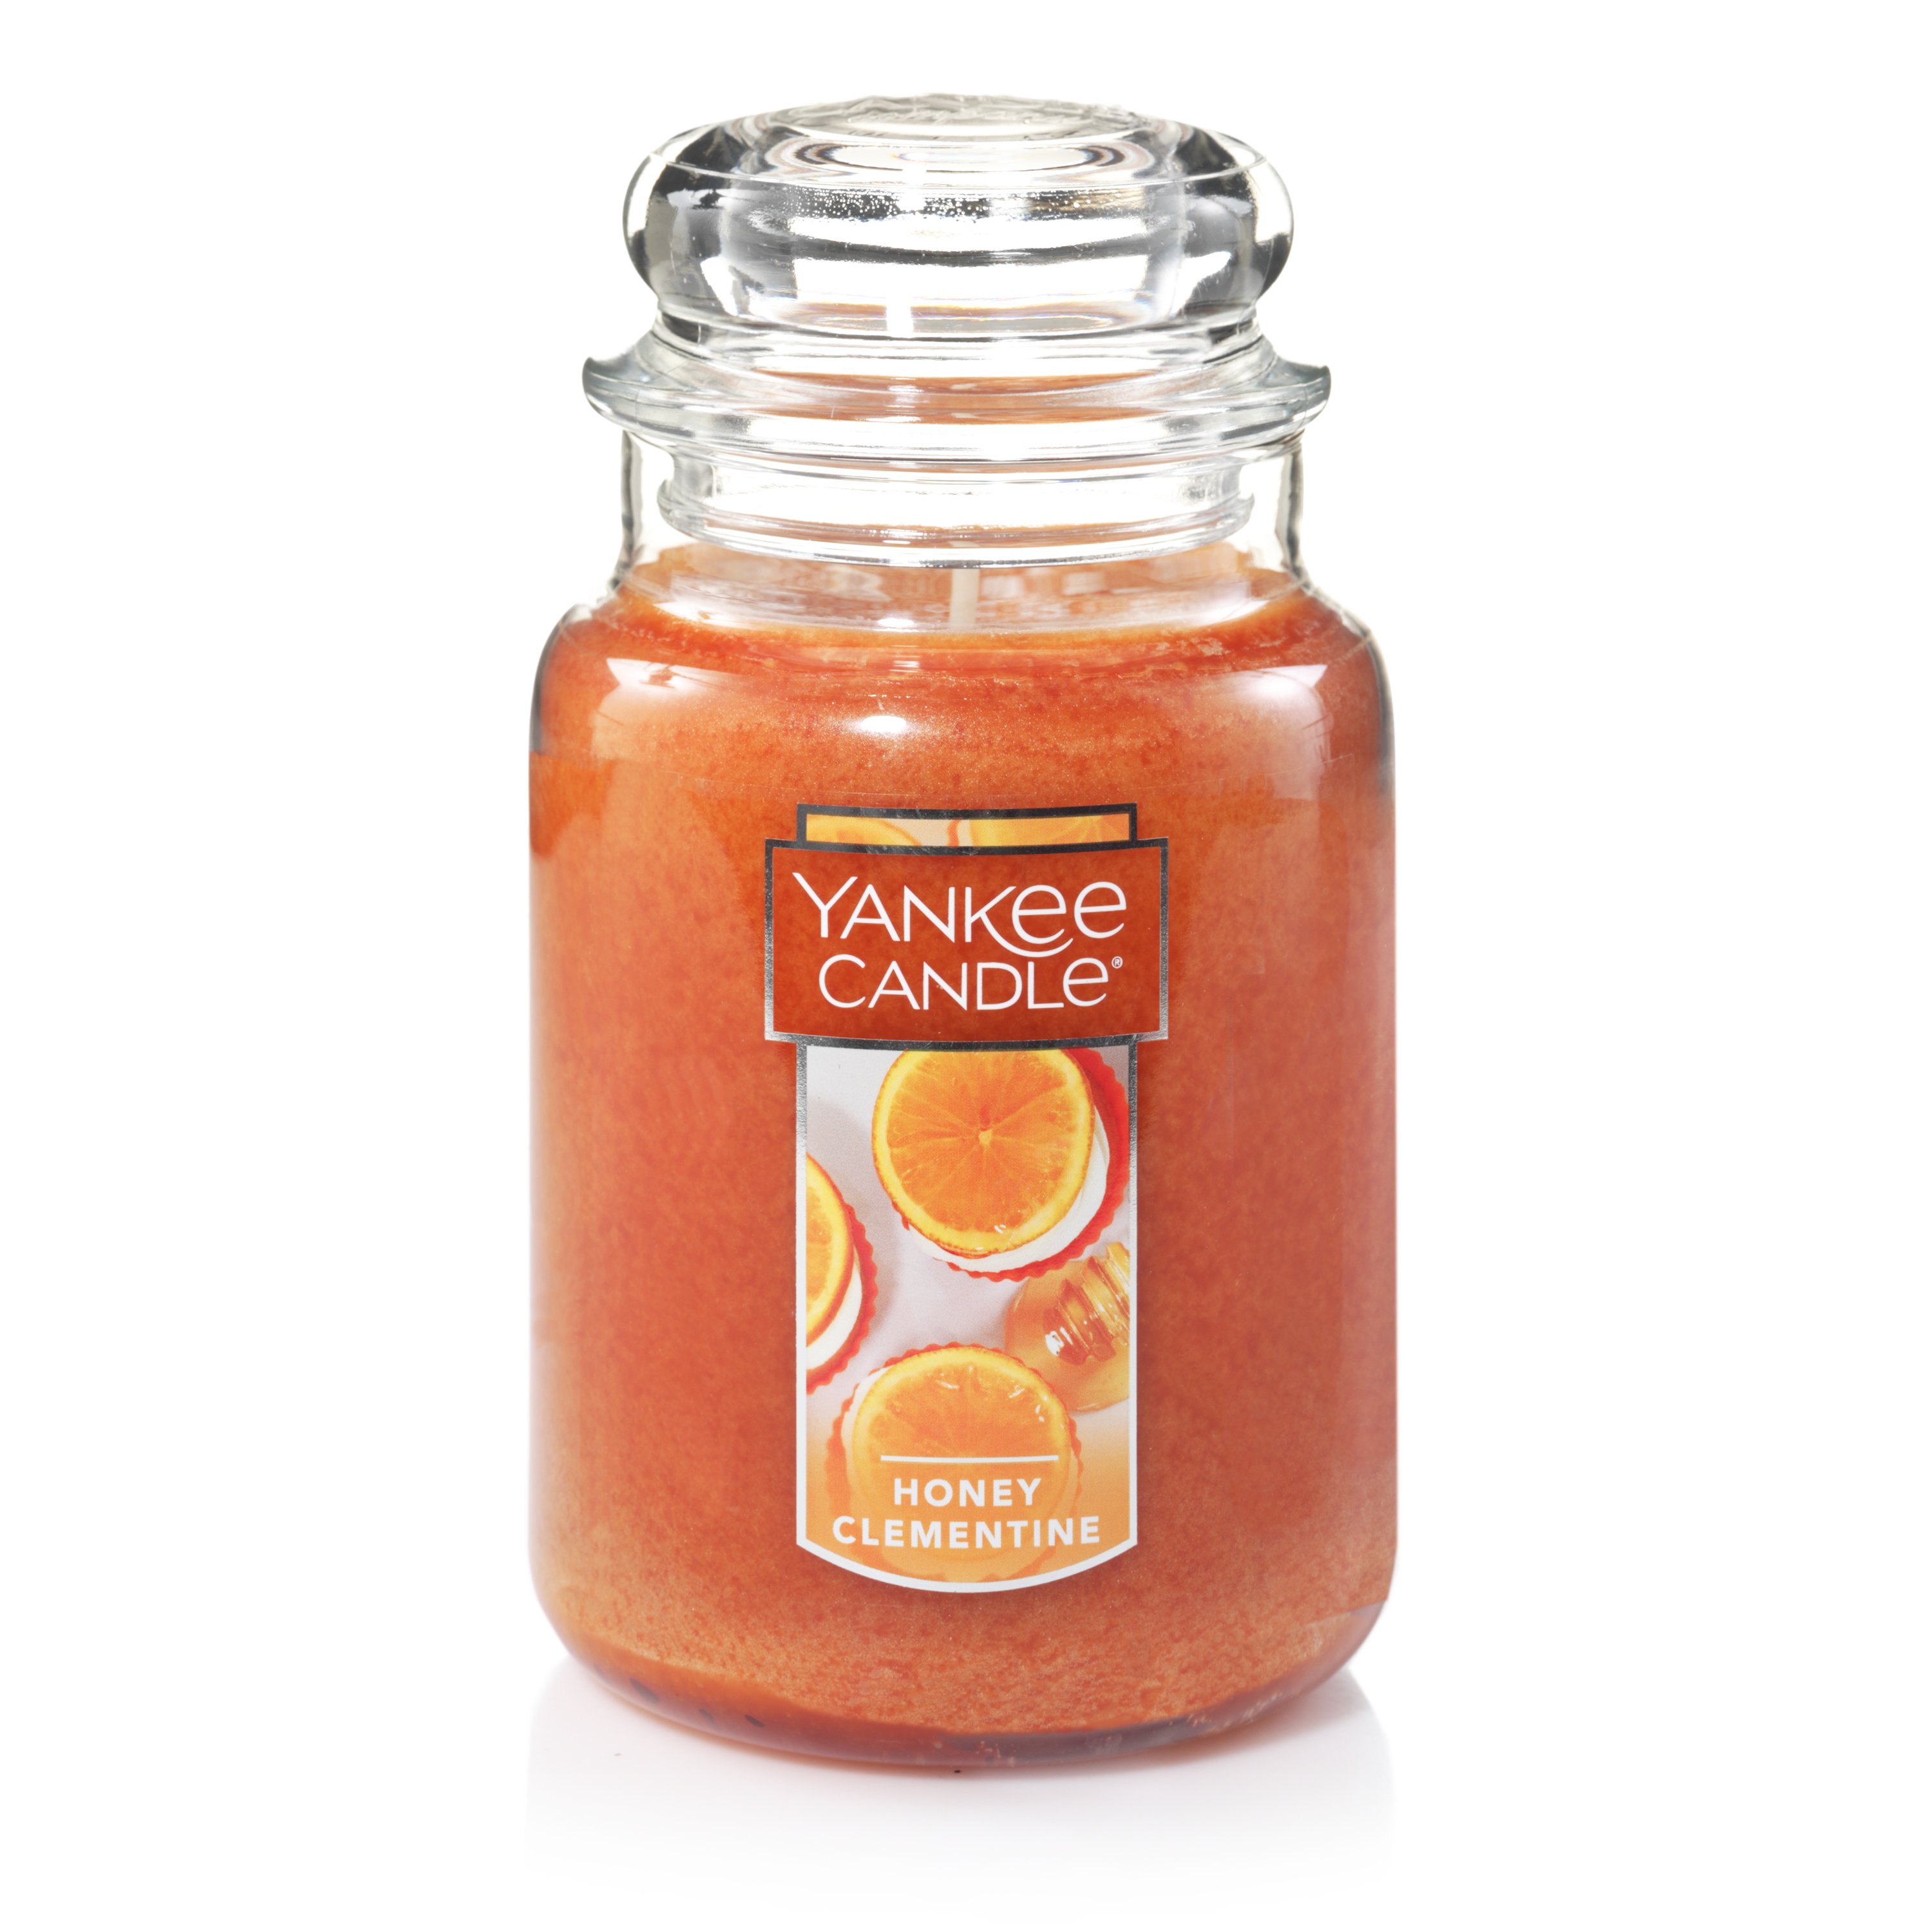 Honey Clementine 22 oz. Original Large Jar Candles - Large Jar